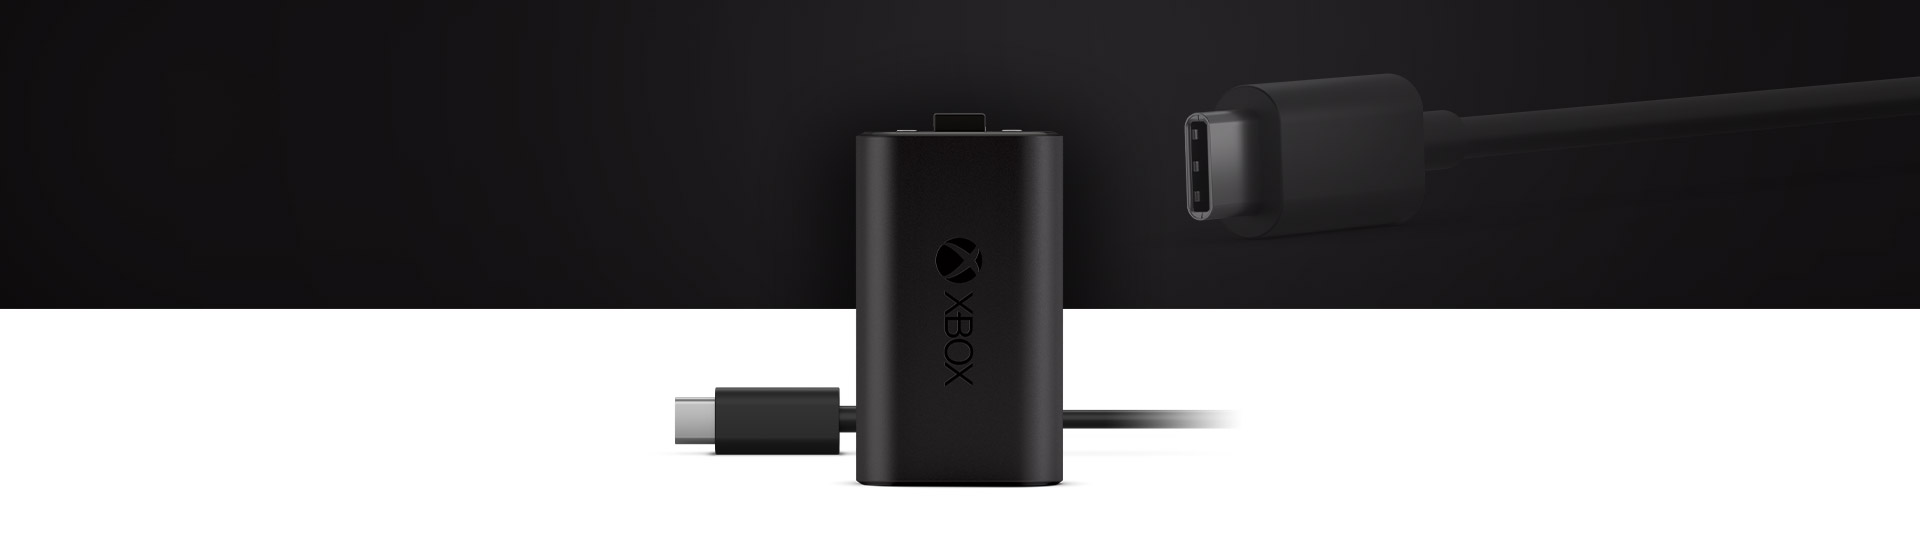 Dobíjecí baterie Xbox + kabel USB-C® s detailem kabelu USB-C®